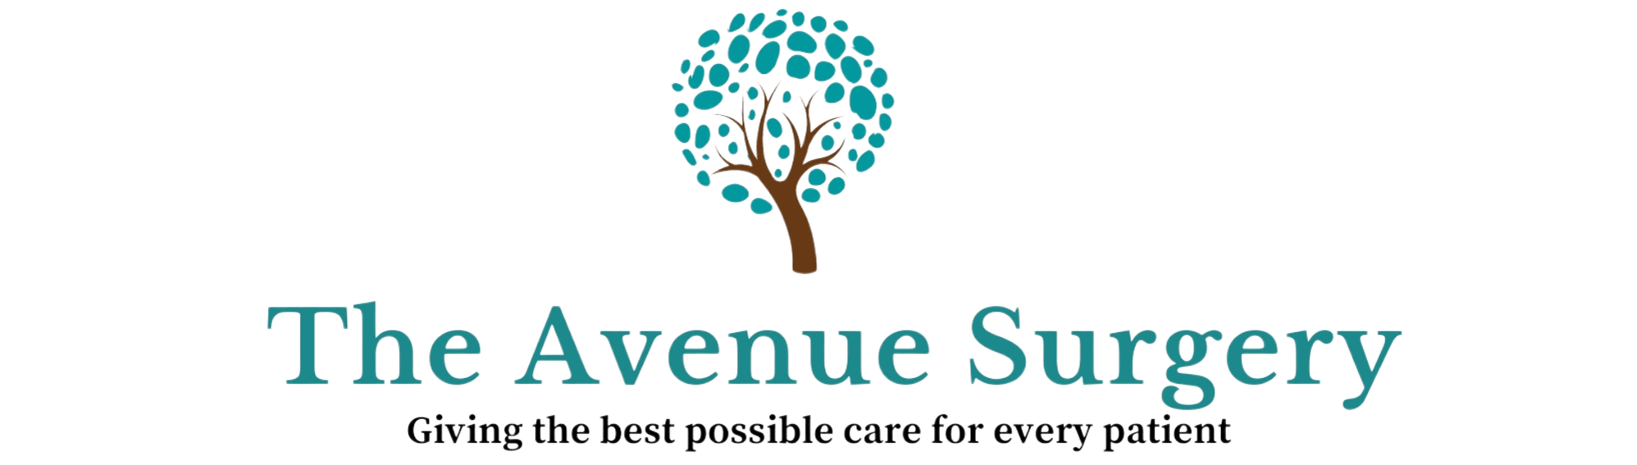 The Avenue Surgery, 14-16 The Avenue, Warminster, Wiltshire, BA12 9AA. 01985 224600 Logo